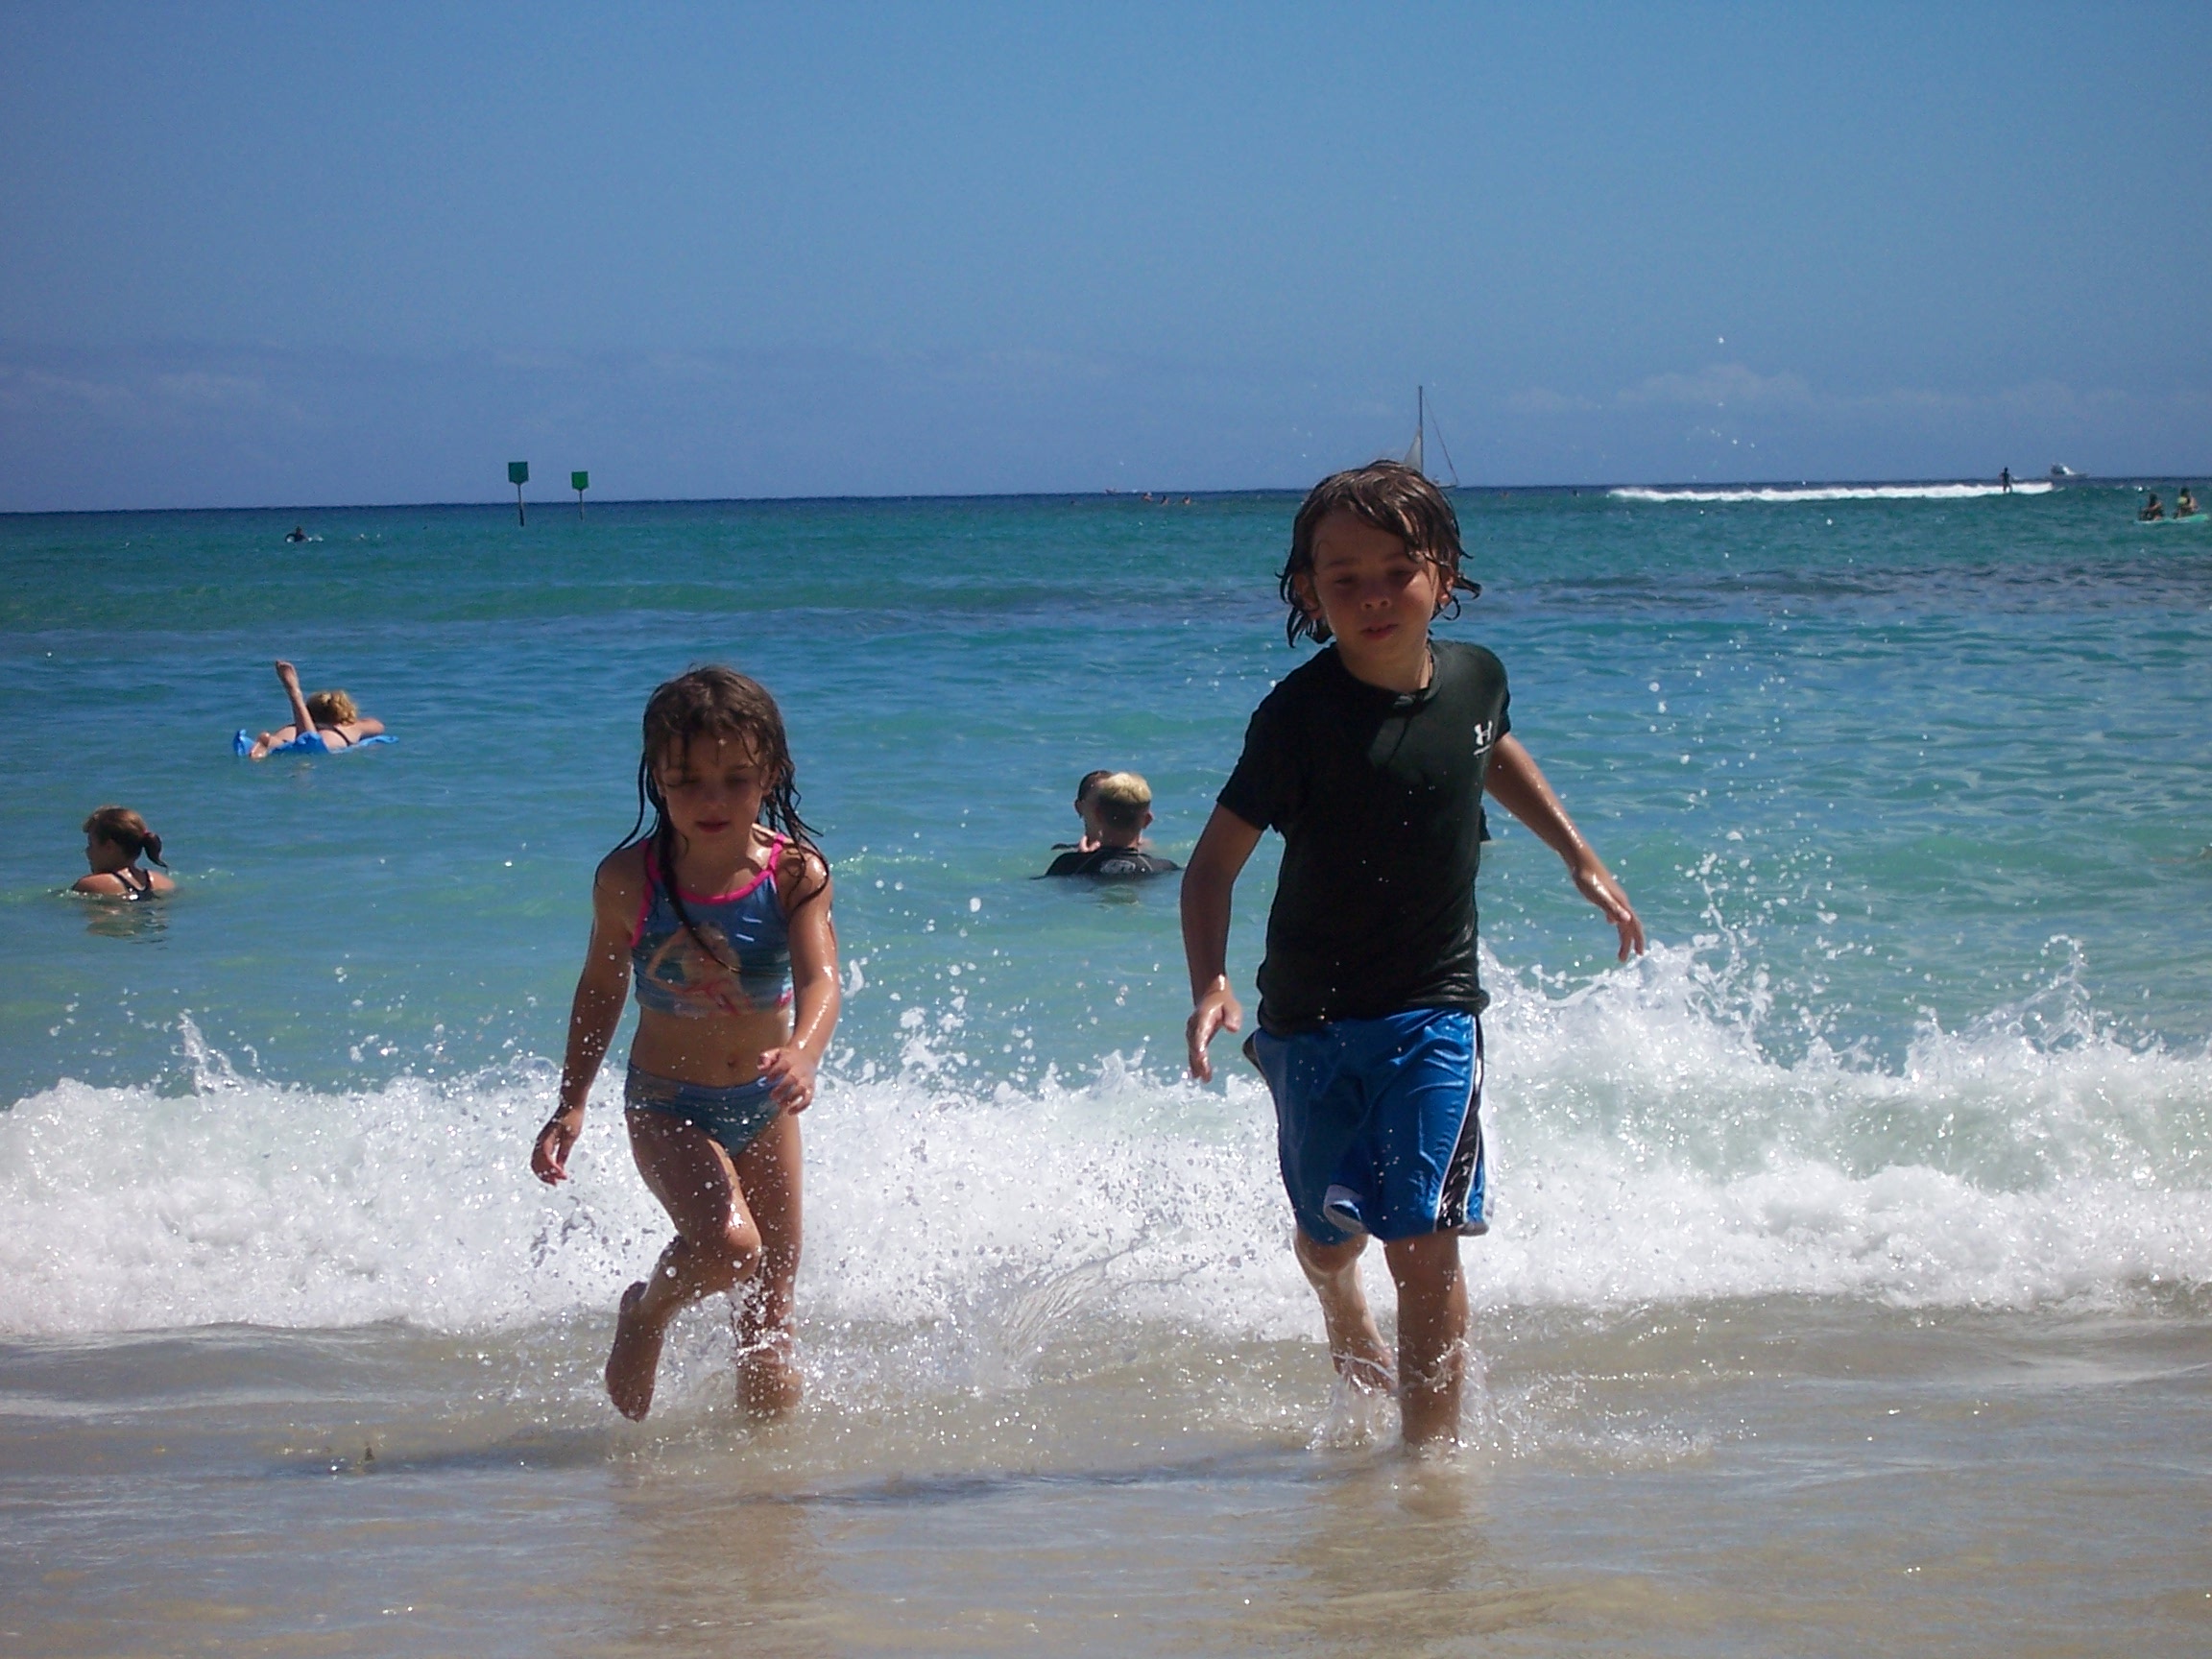 David and Rachel running on the beach.